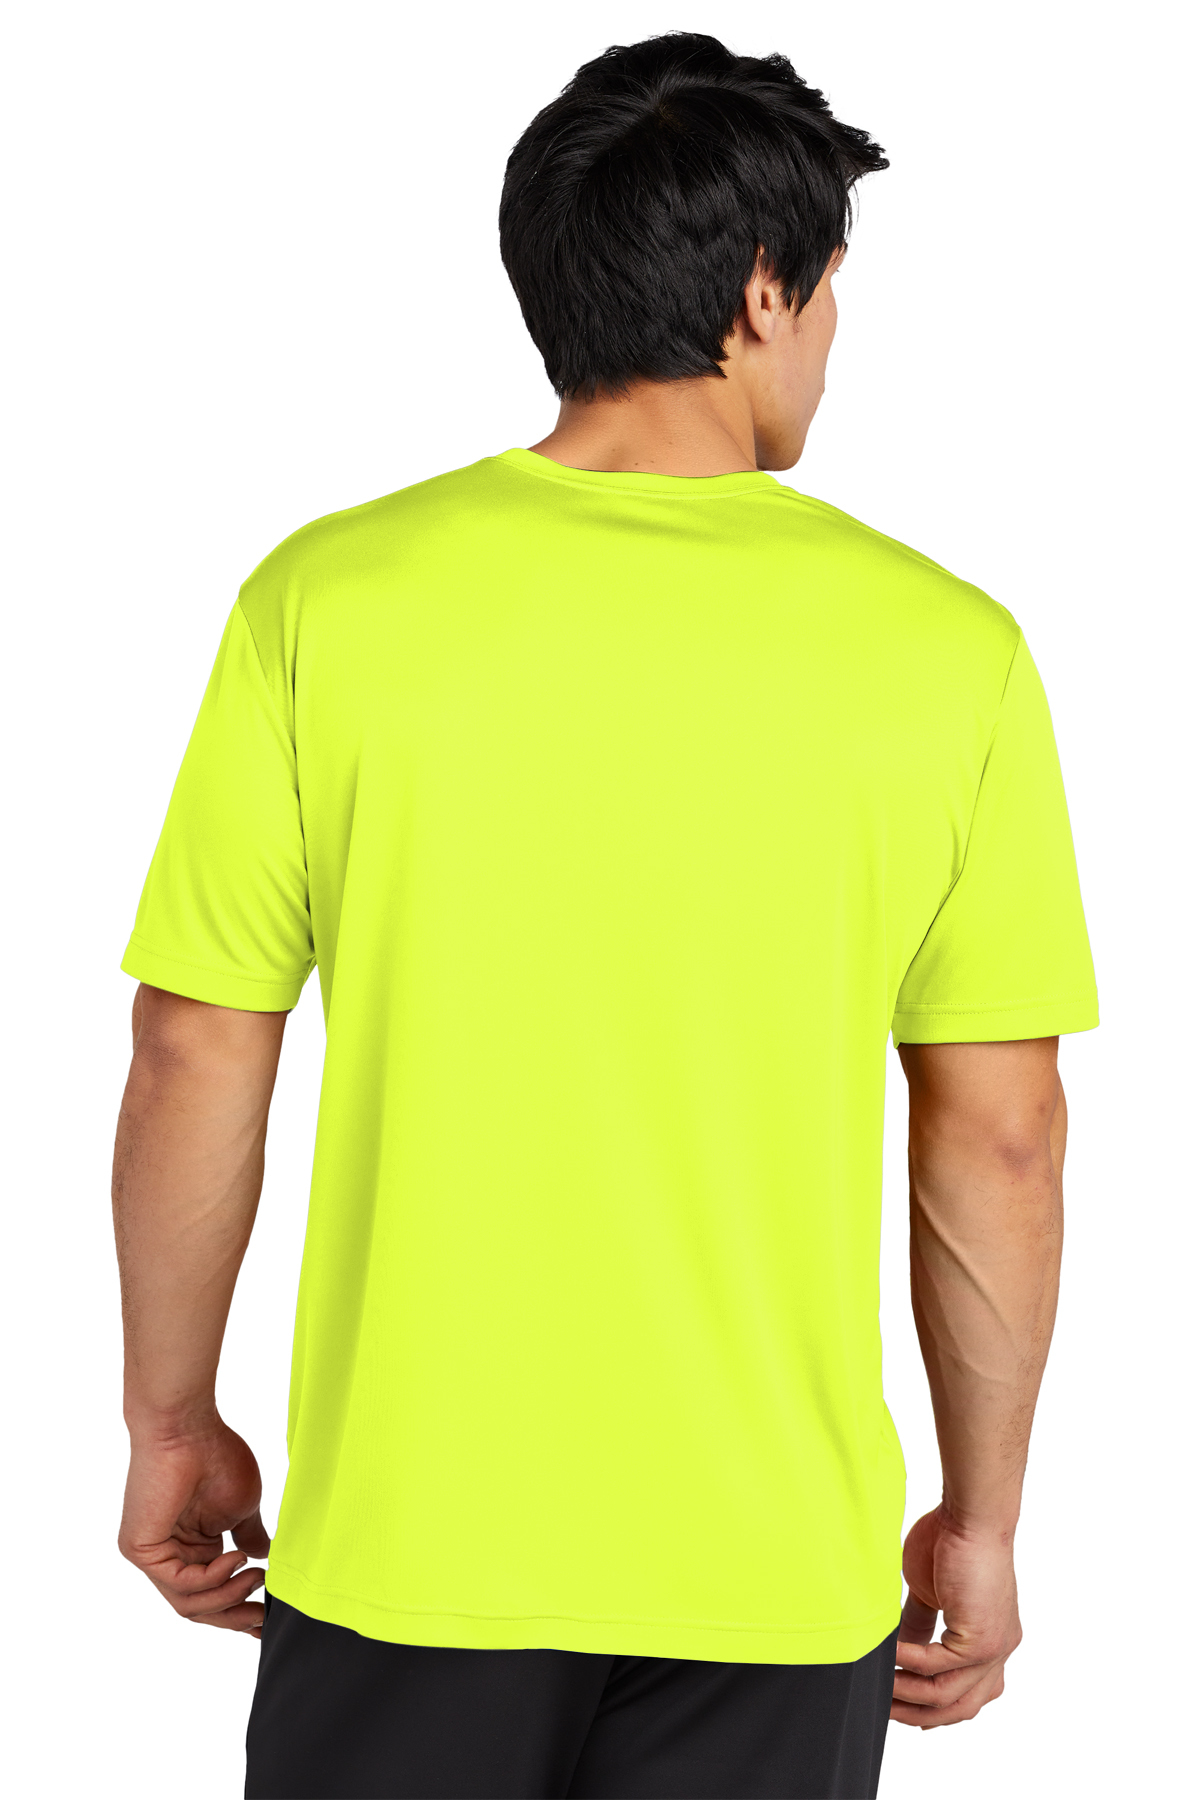 Teerockin Pete Alonso Neon Cheers Long Sleeve Shirt